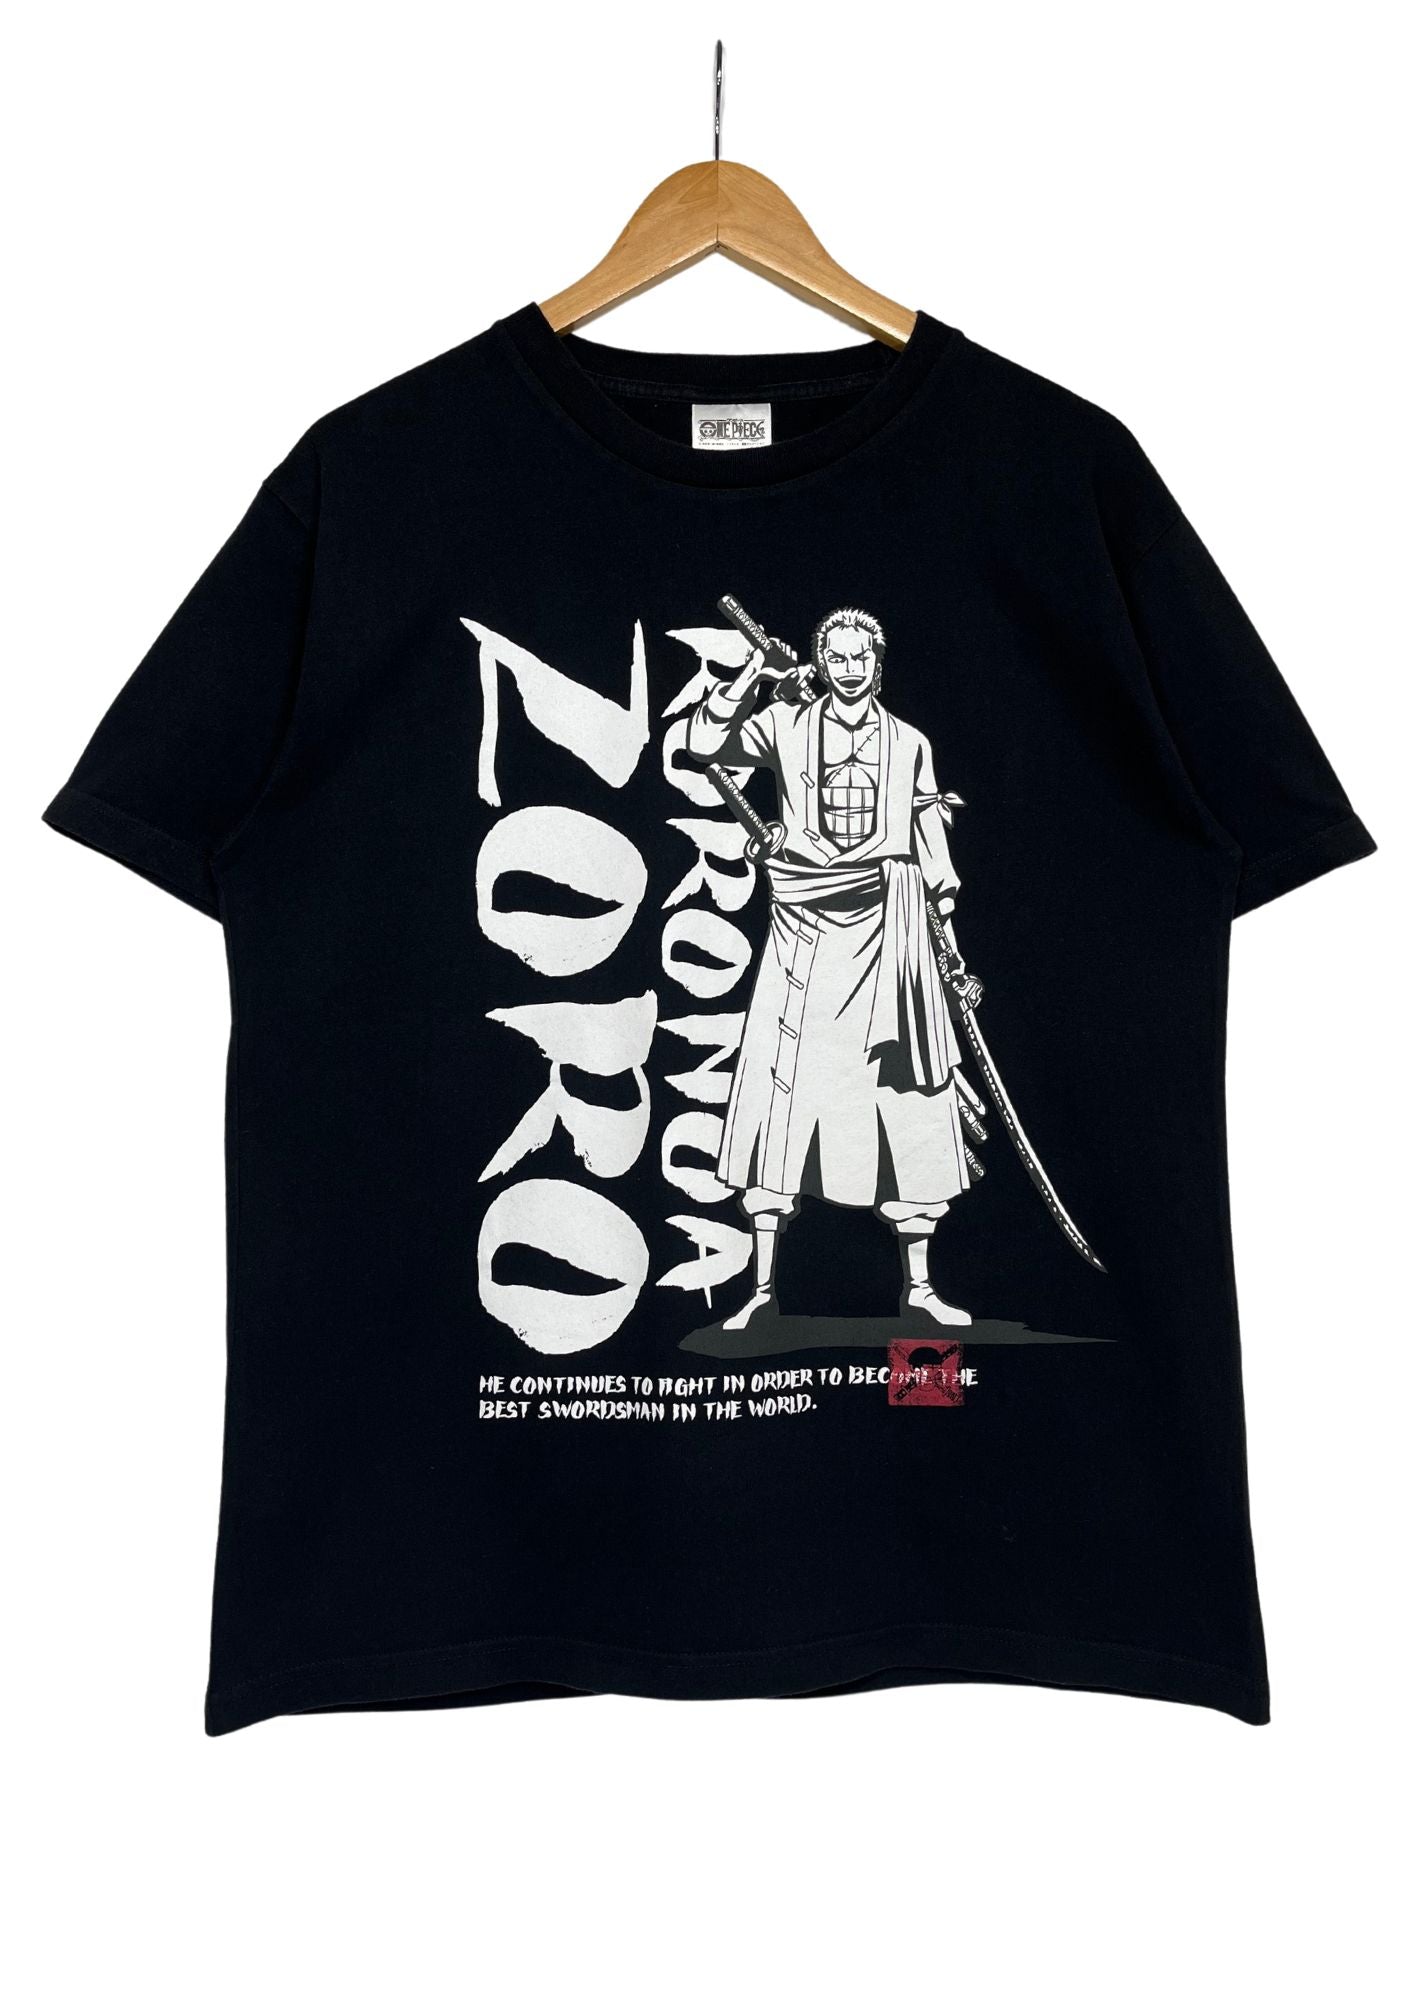 One Piece x One Piece Official Zoro Roronoa T-shirt